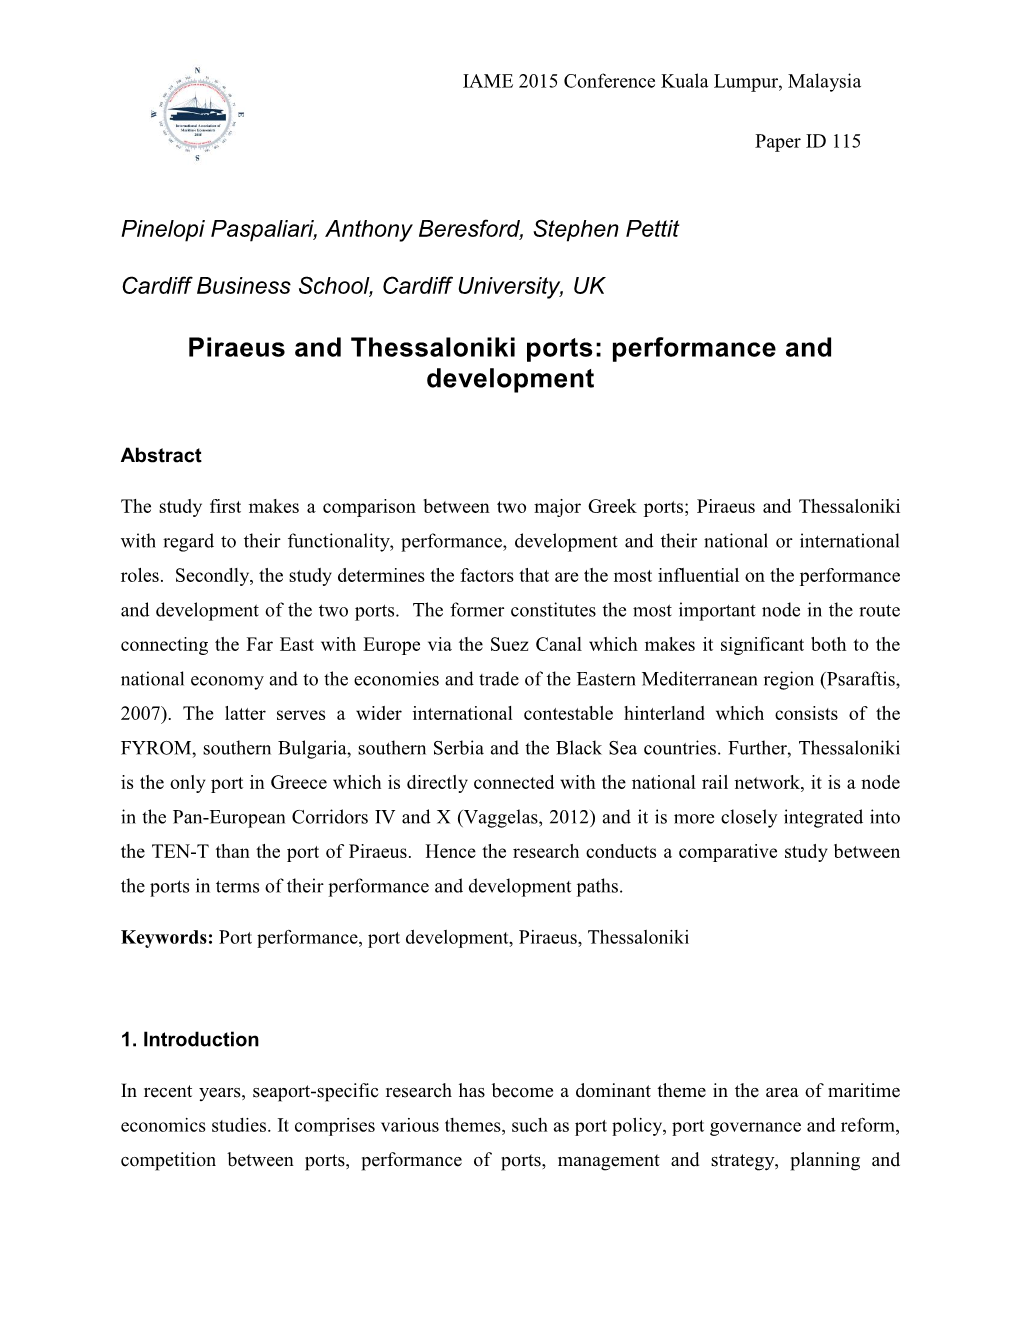 Piraeus and Thessaloniki Ports: Performance and Development